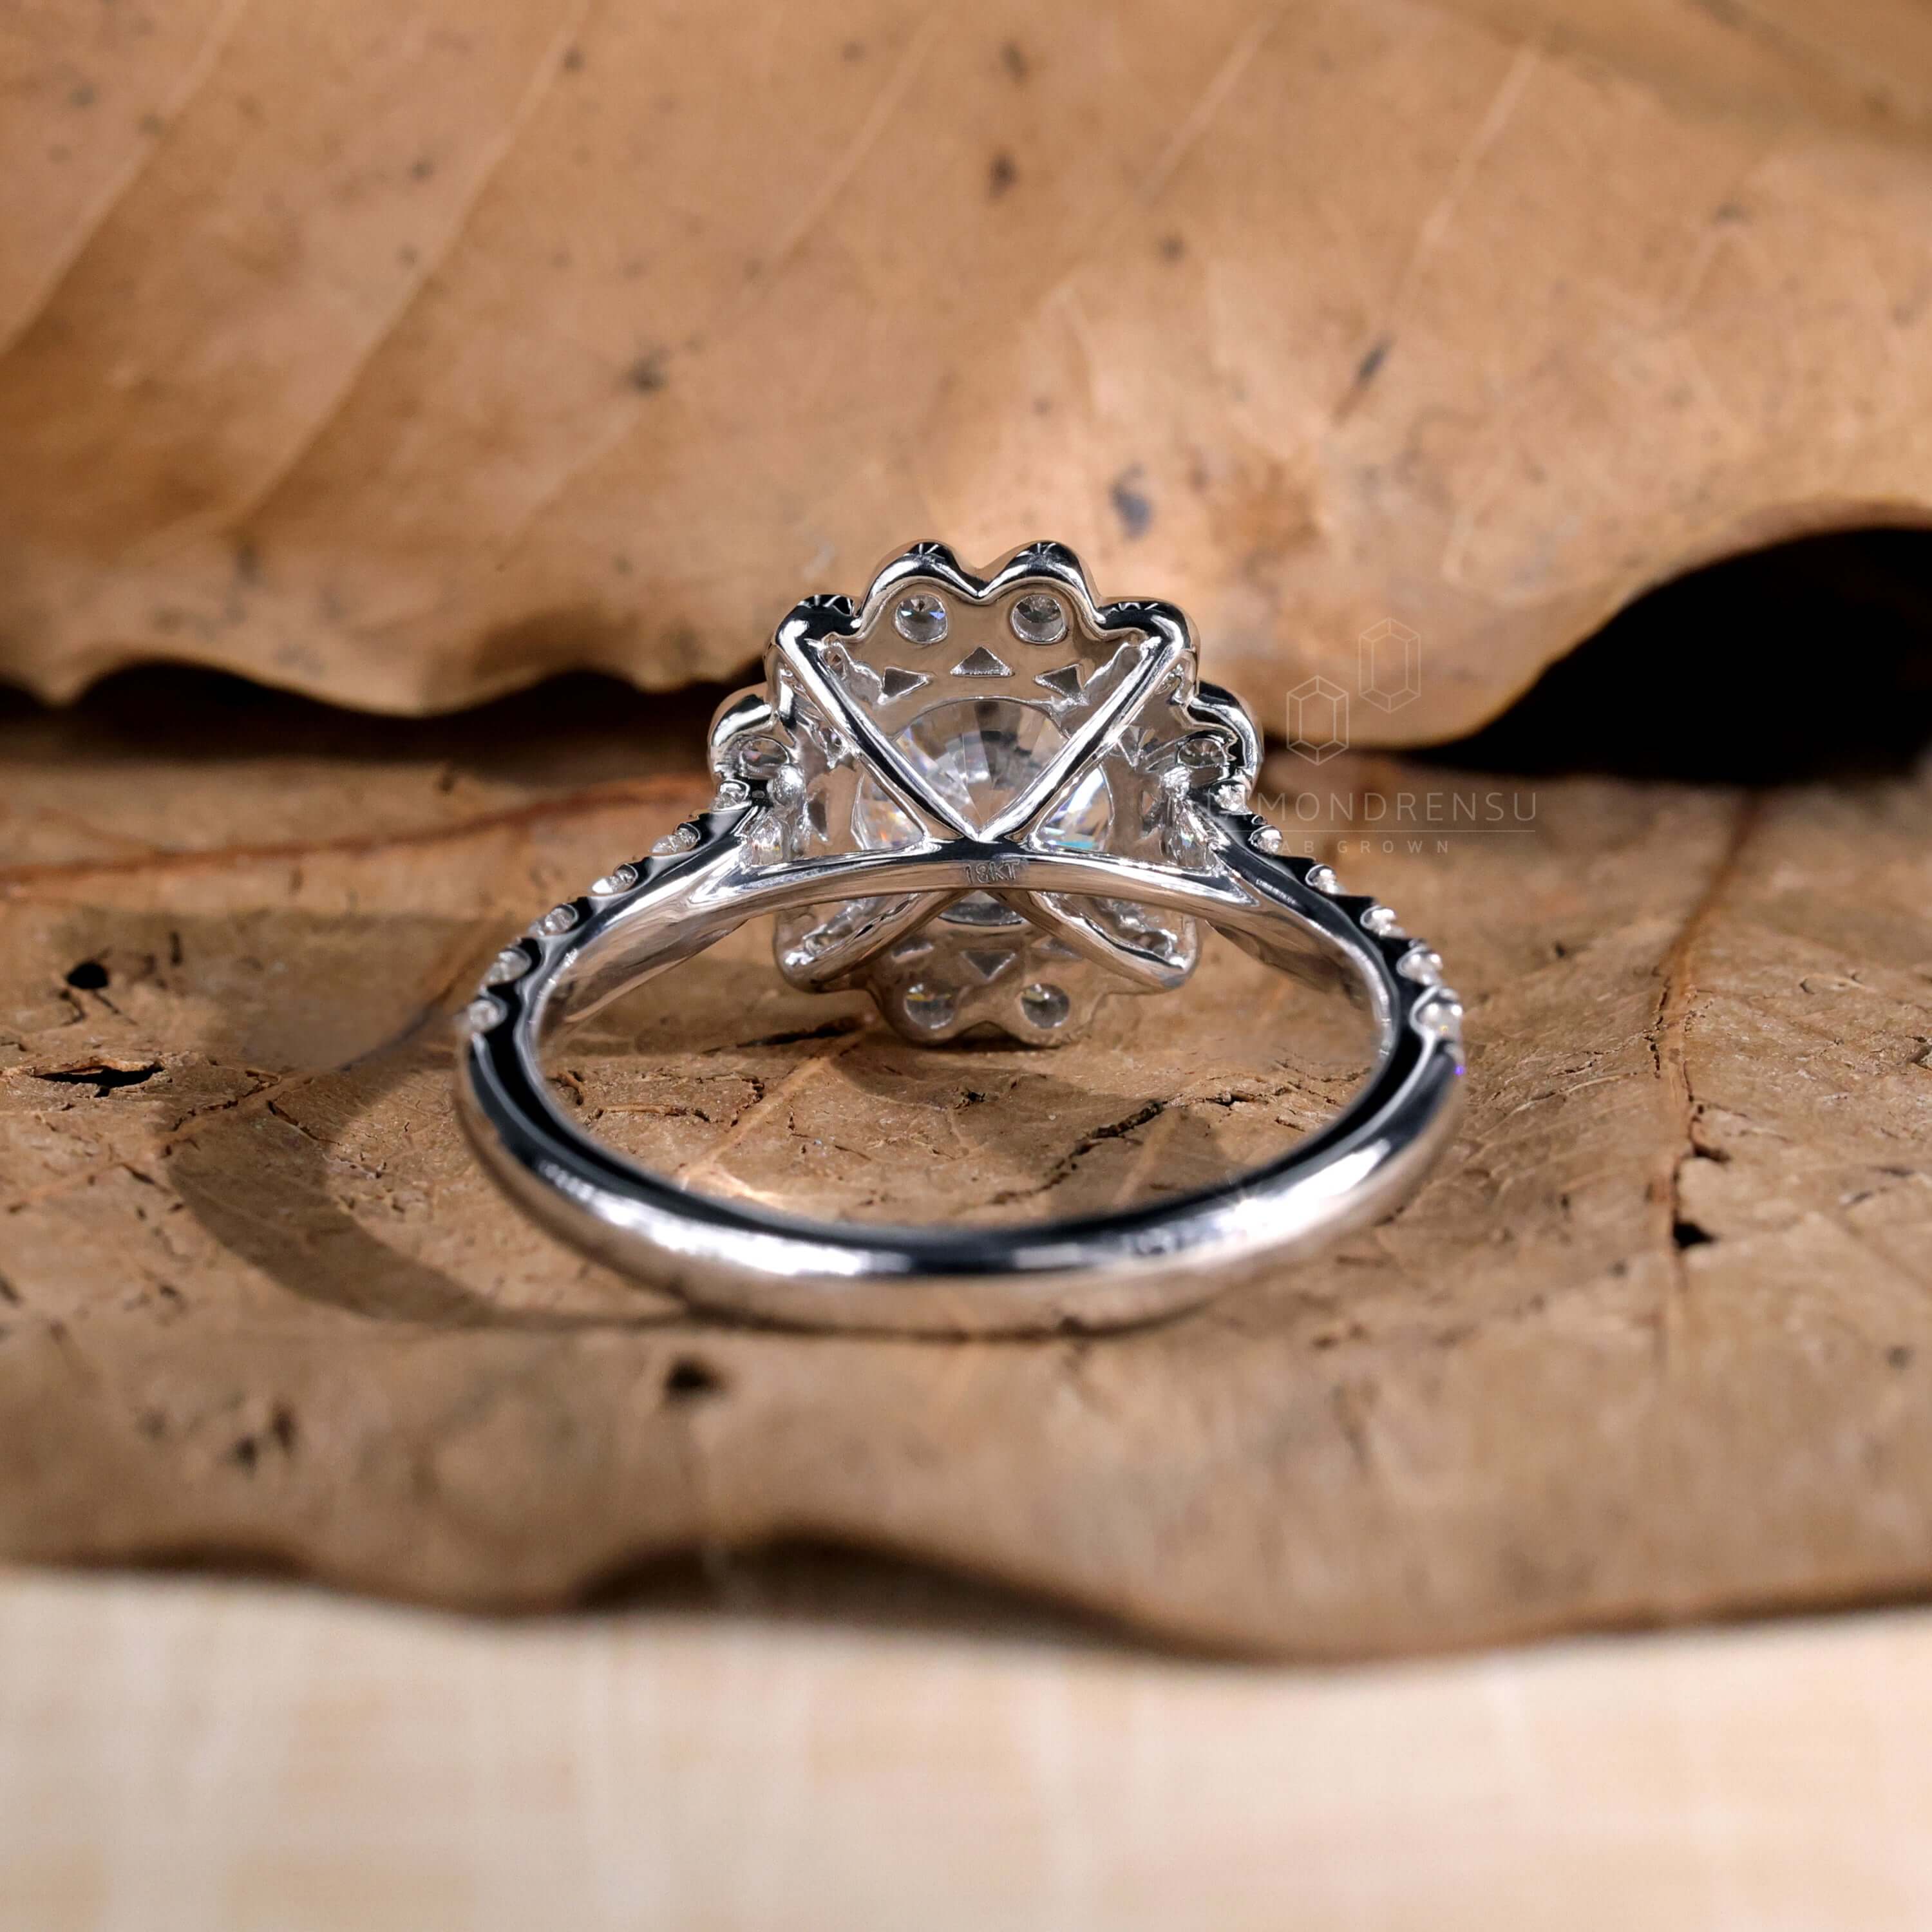 unique diamond ring - diamondrensu